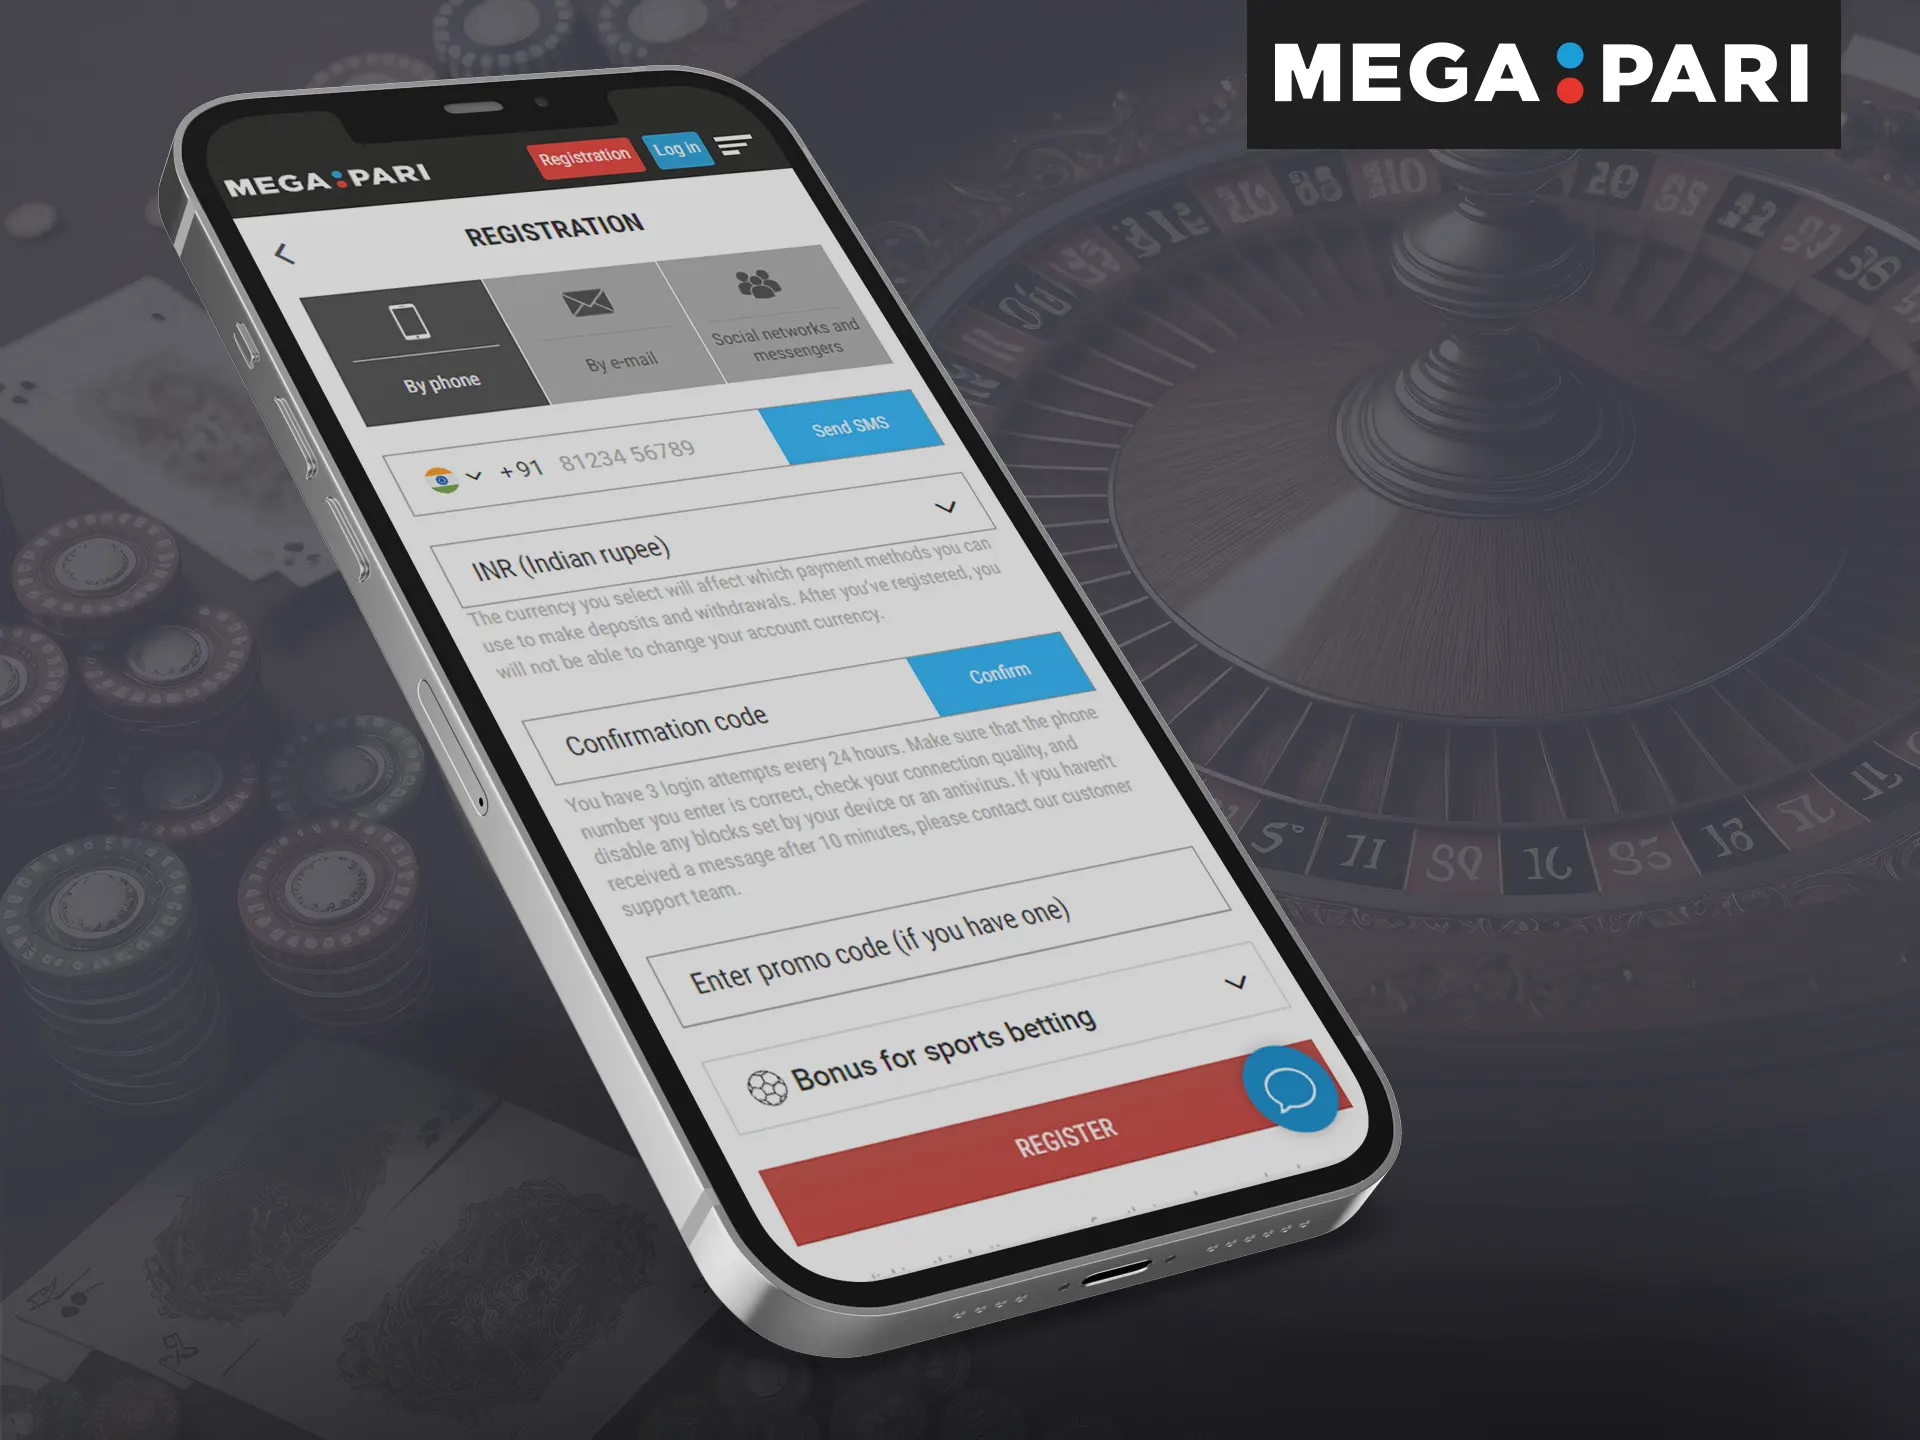 Sign up on the Megapari app.